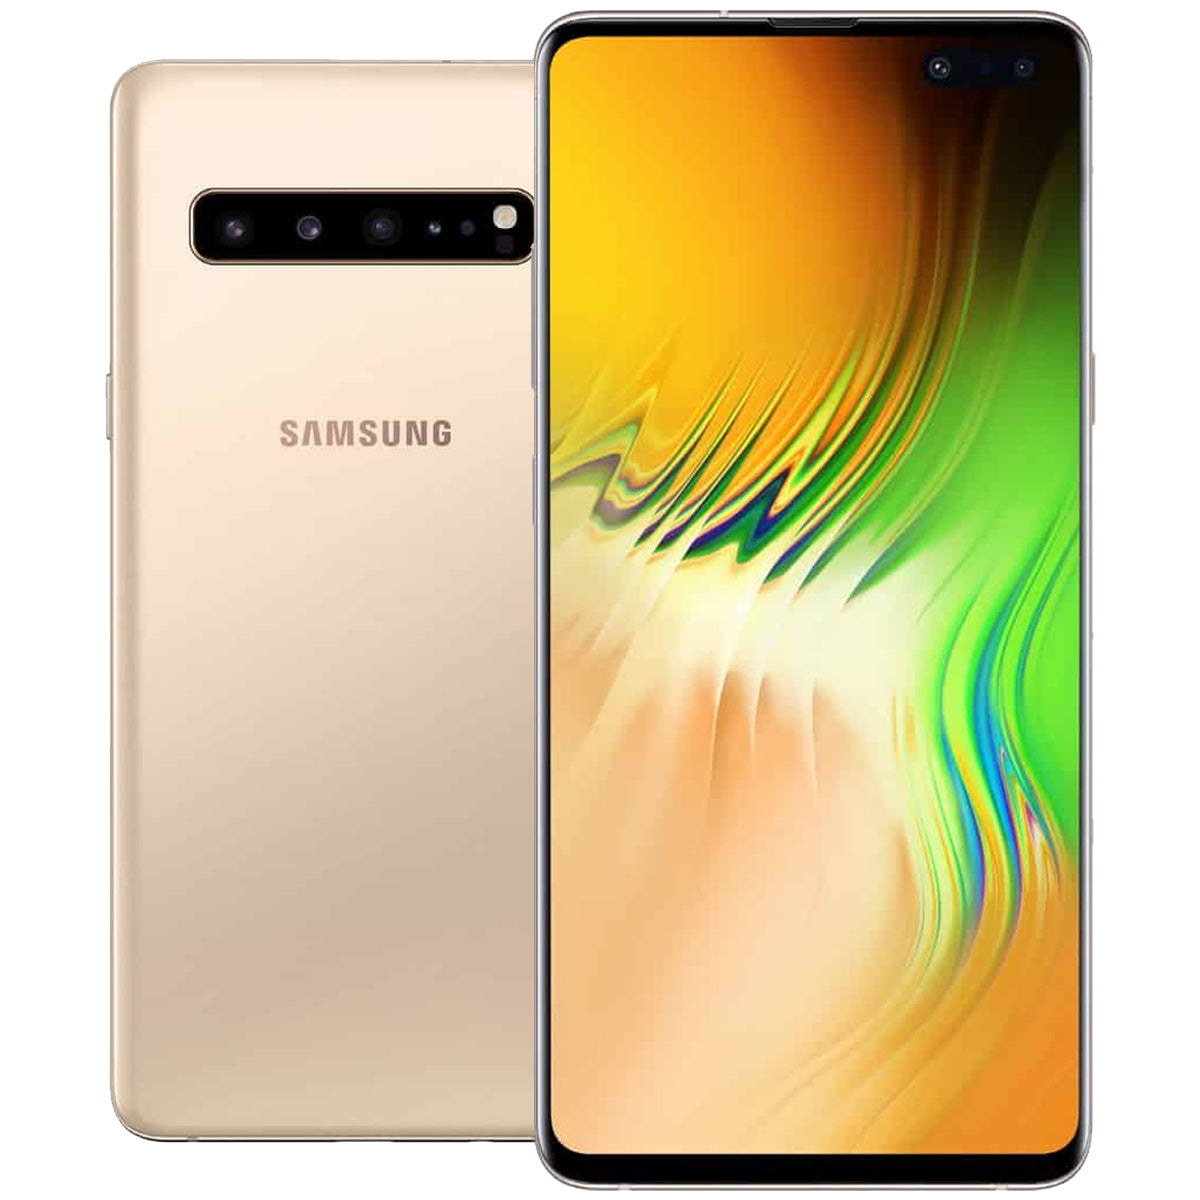 Samsung Galaxy S10 5G FAIR Condition Unlocked Smartphone Samsung